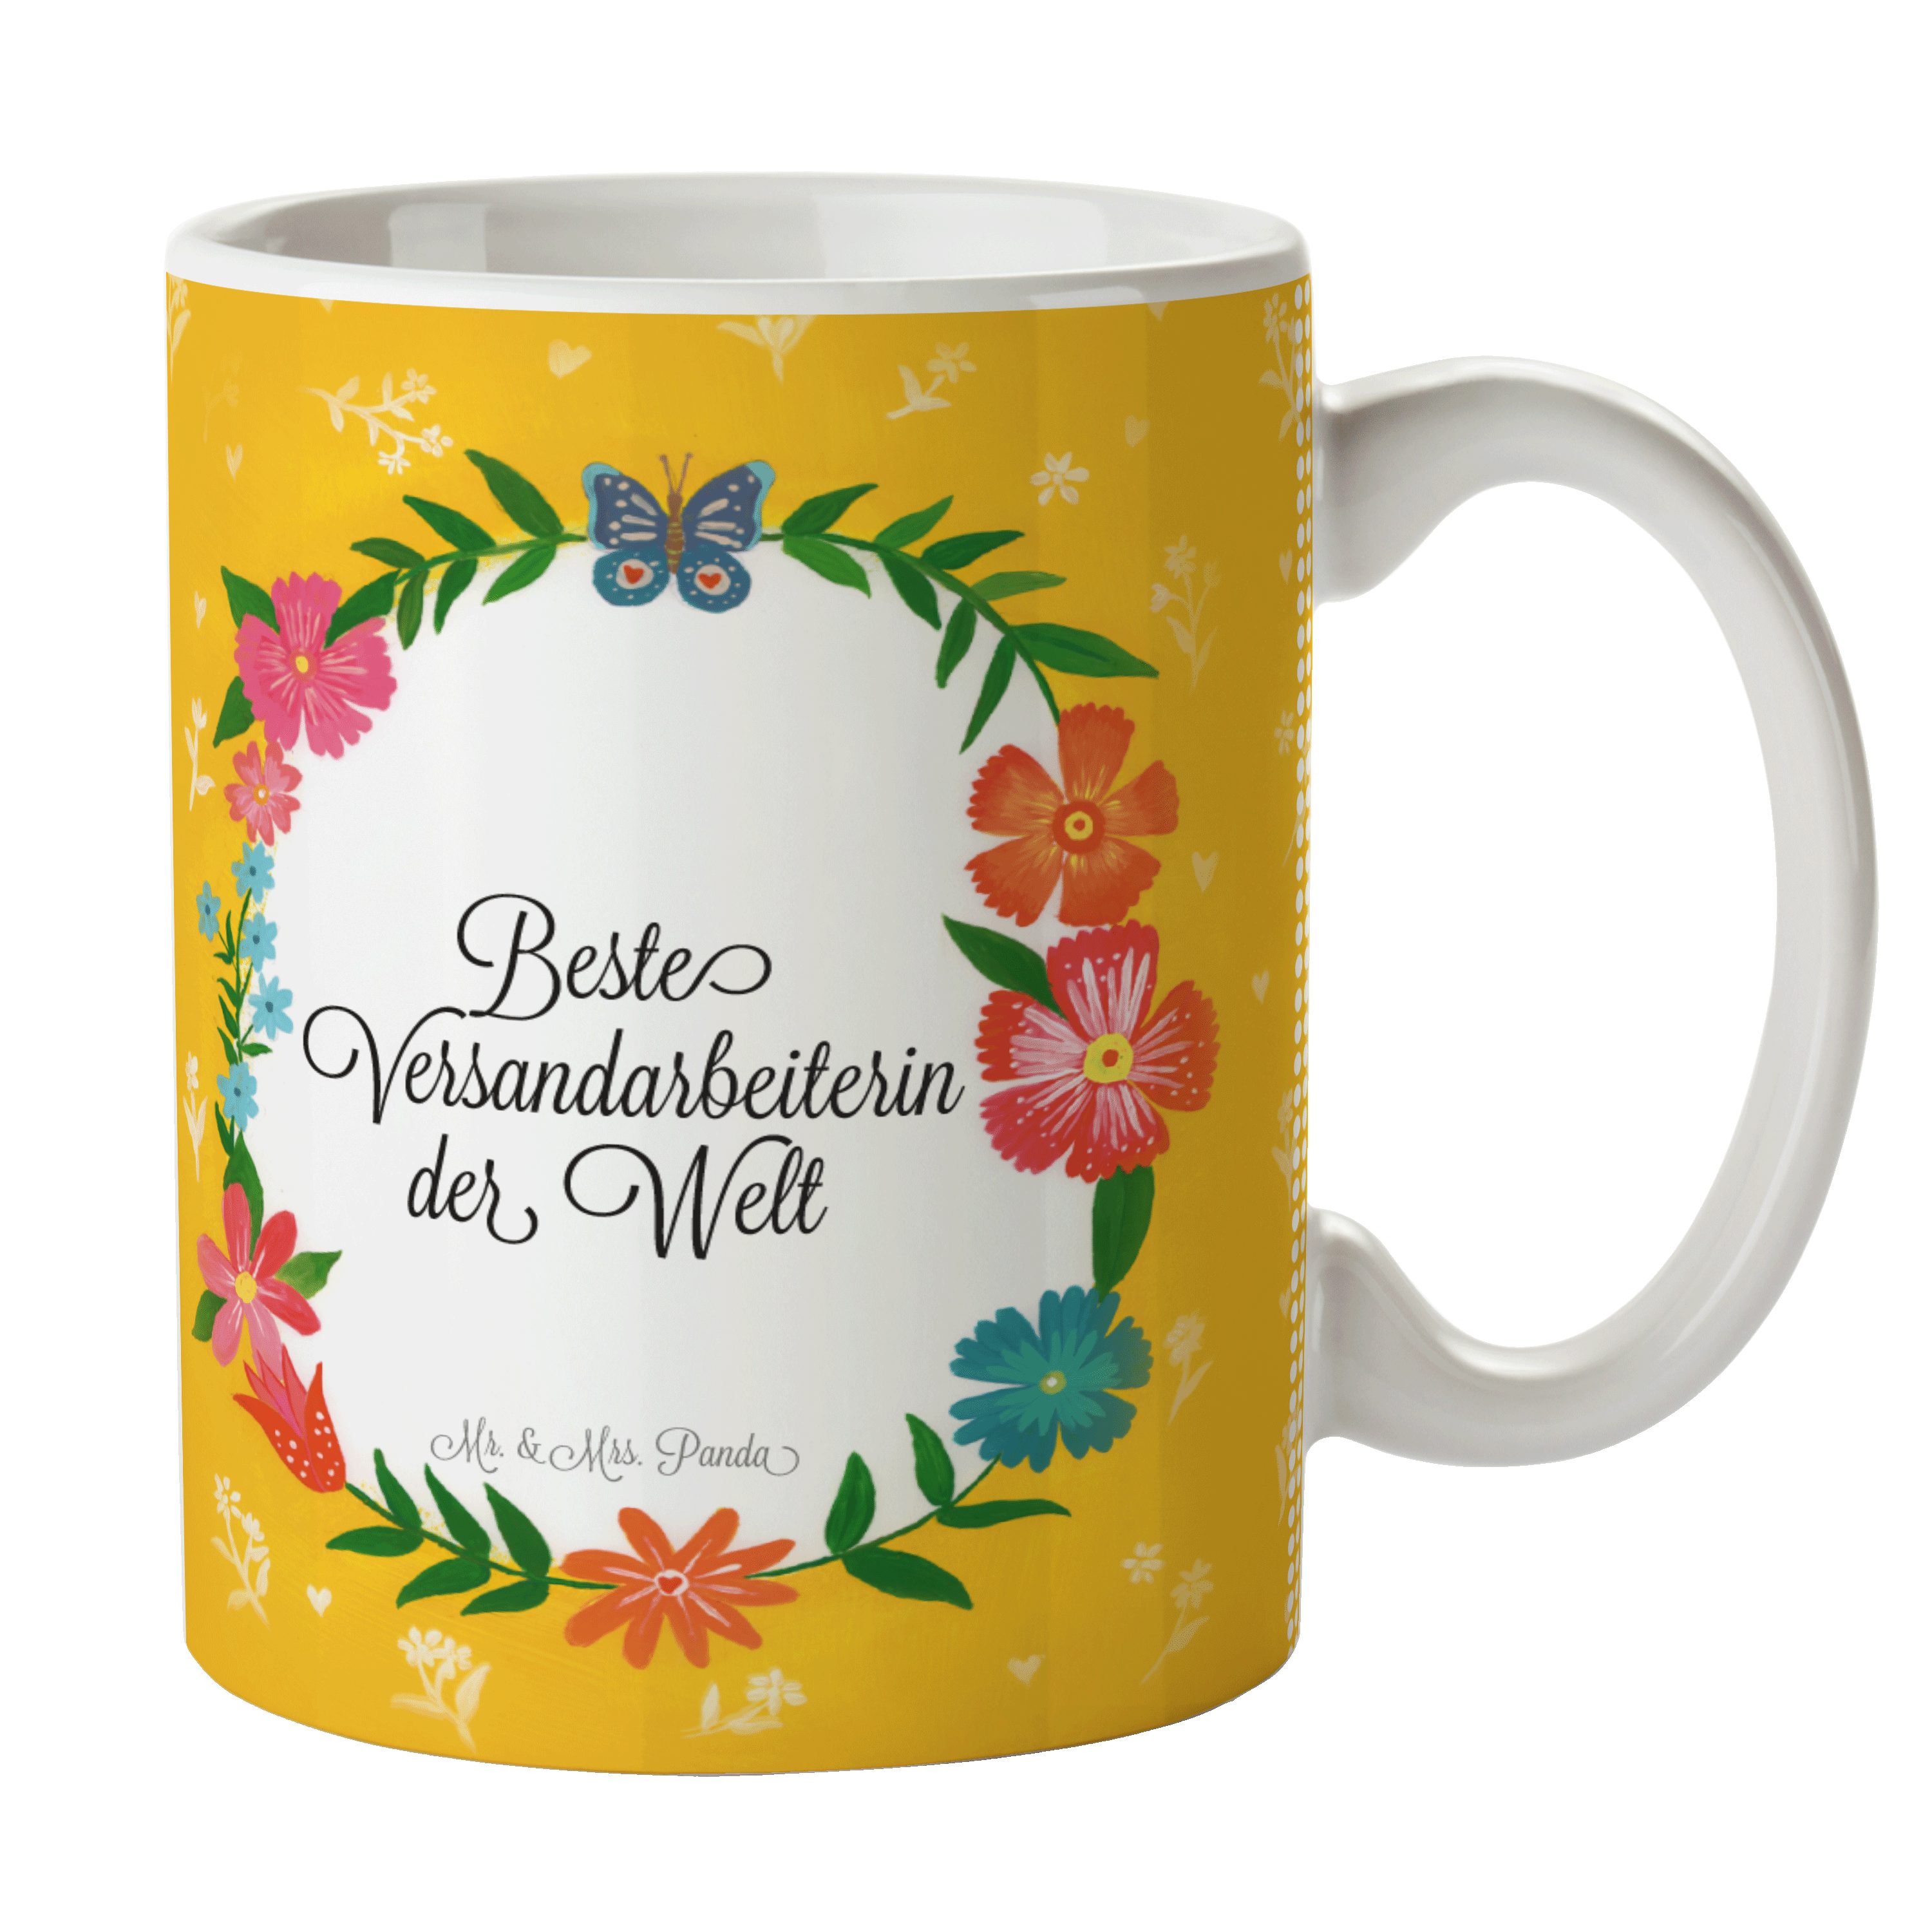 Mr. & Mrs. Panda Tasse Versandarbeiterin - Geschenk, Büro Tasse, Becher, Kaffeebecher, Tasse, Keramik